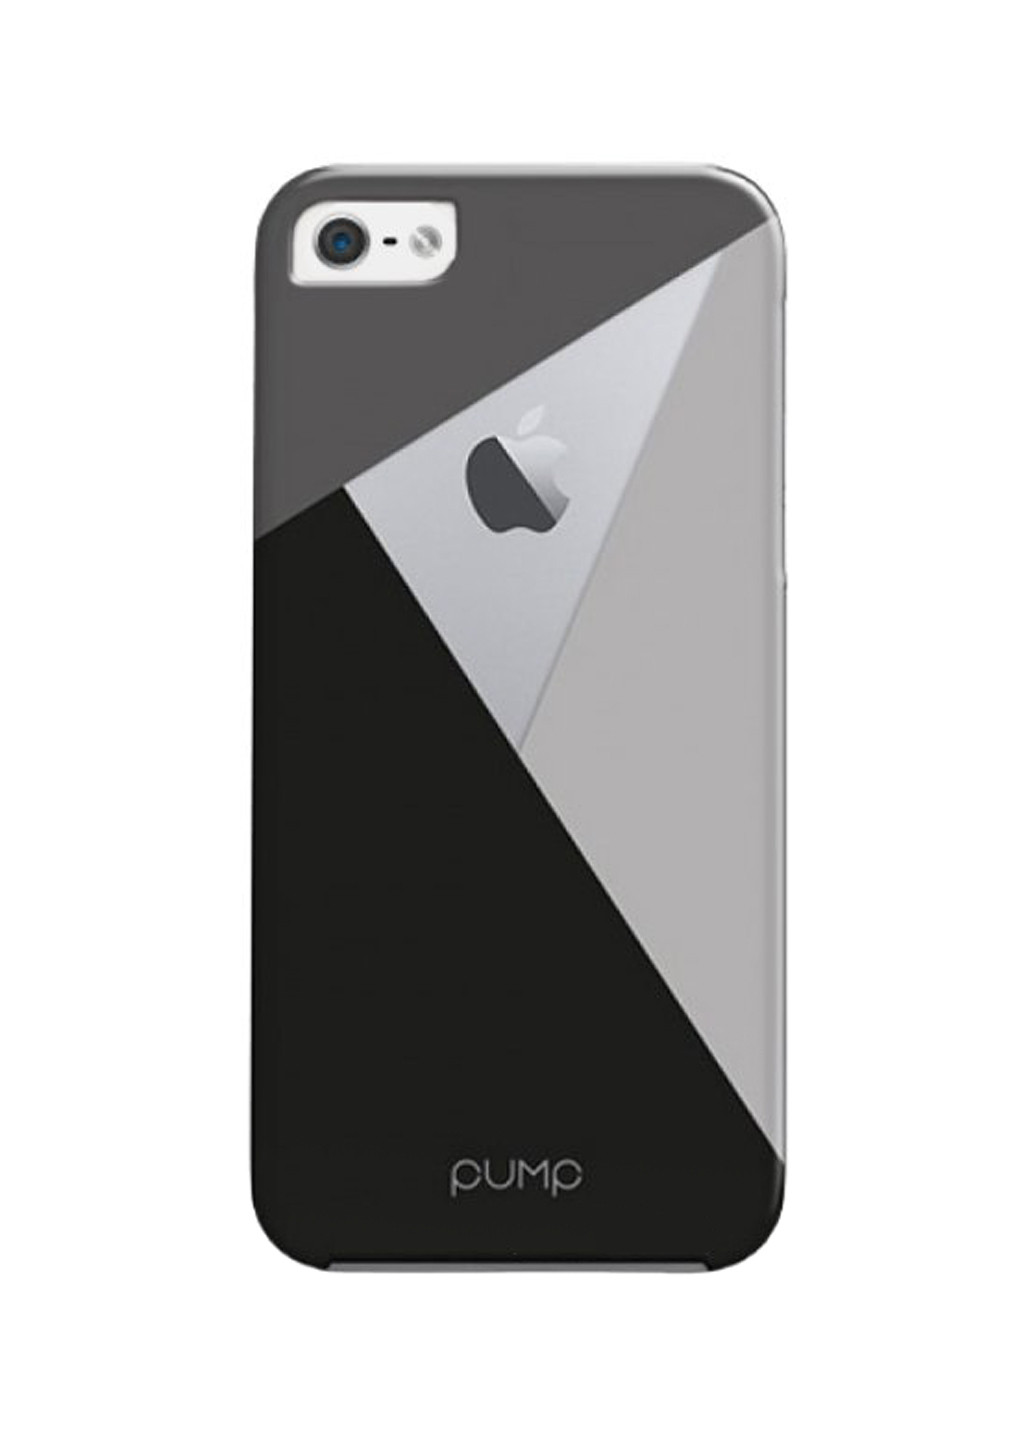 Чехол Transperency Case for iPhone 5/5S/SE Black/Gray Pump transperency case для iphone 5/5s/se black/gray (136993836)